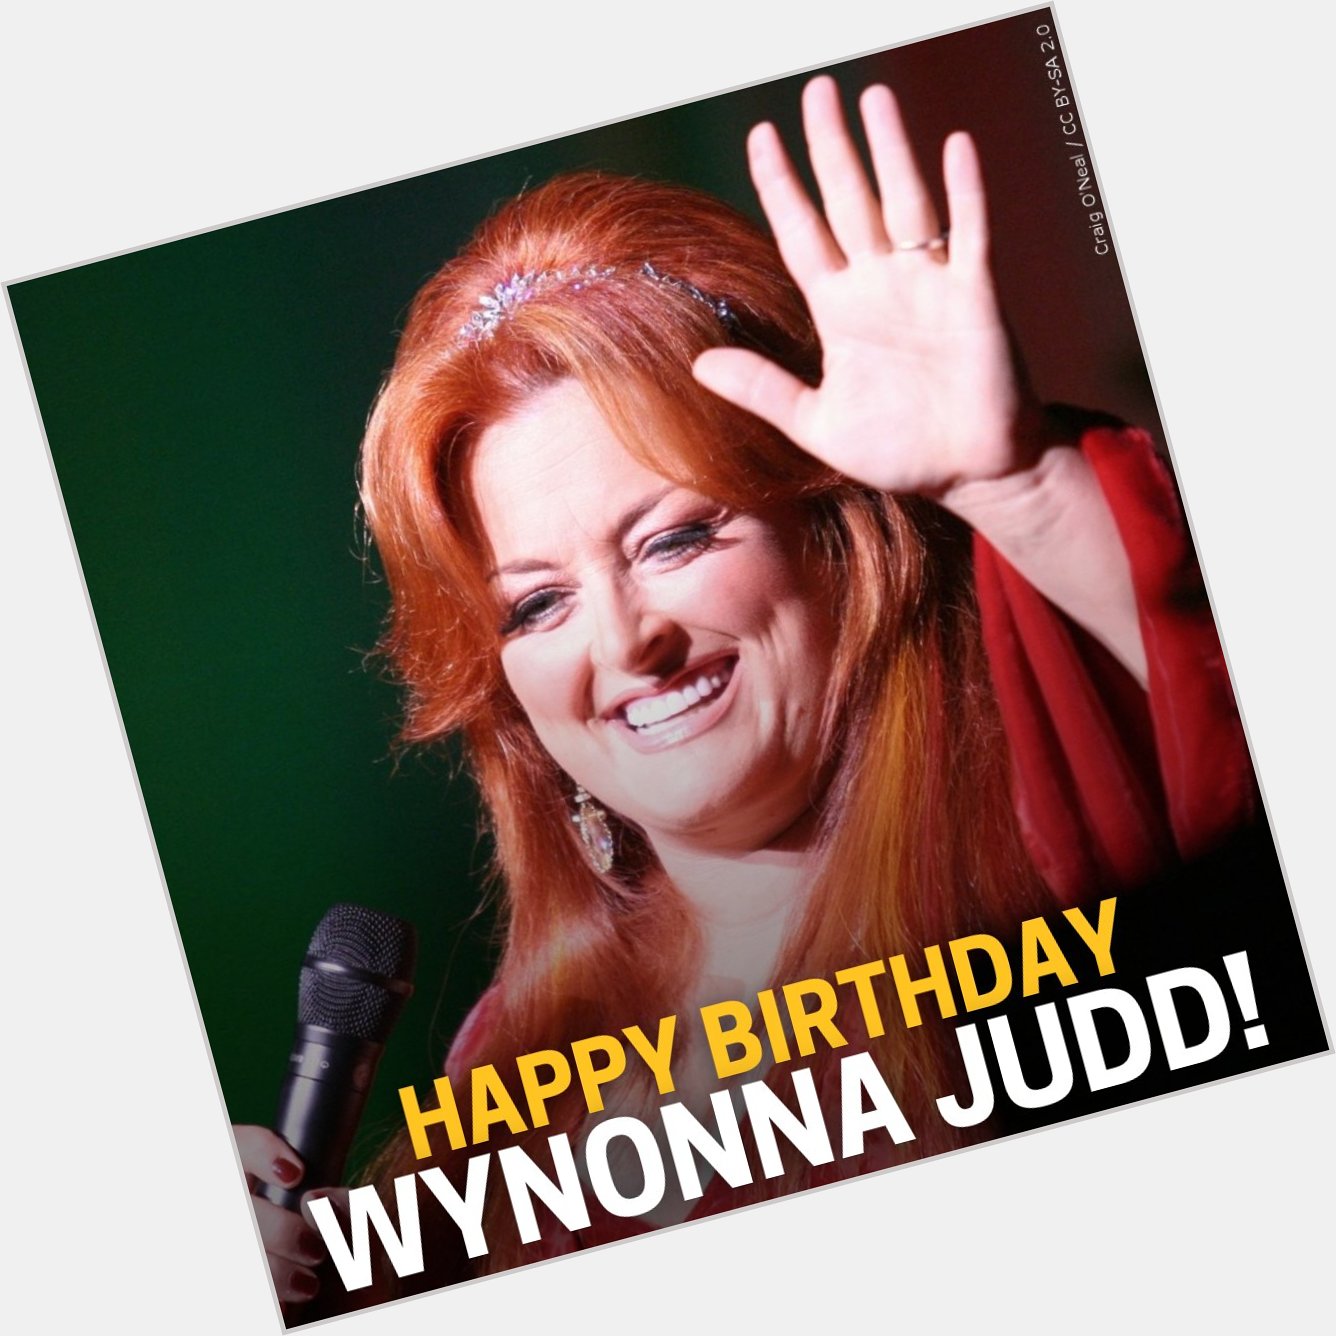 Join us in wishing Wynonna Judd a happy birthday 